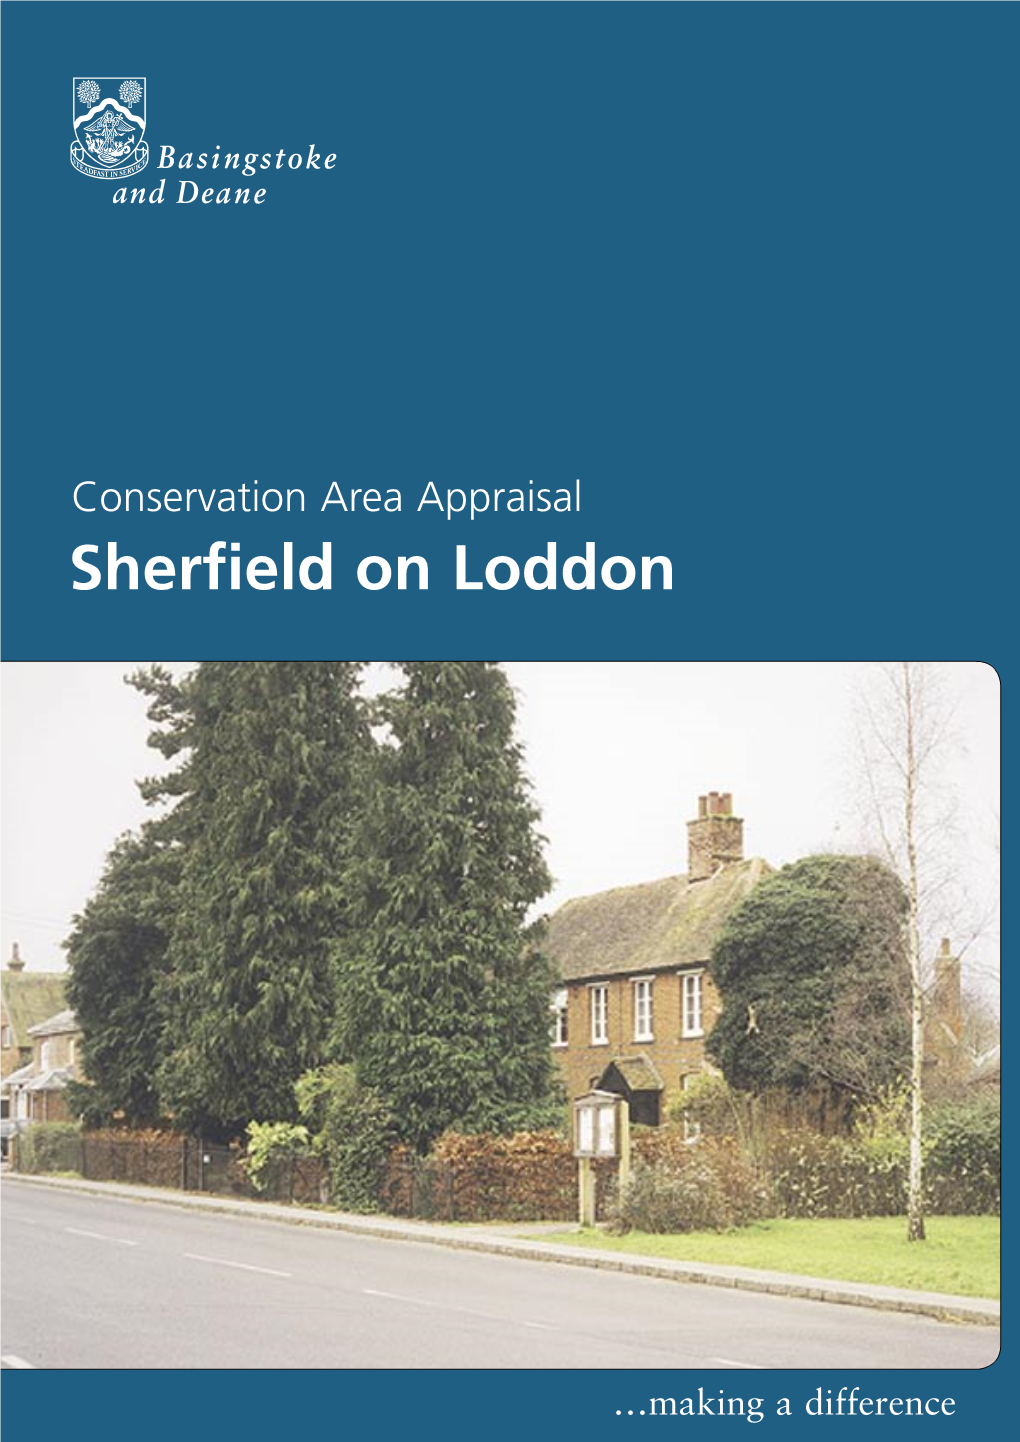 Sherfield on Loddon Conservation Area Appraisal